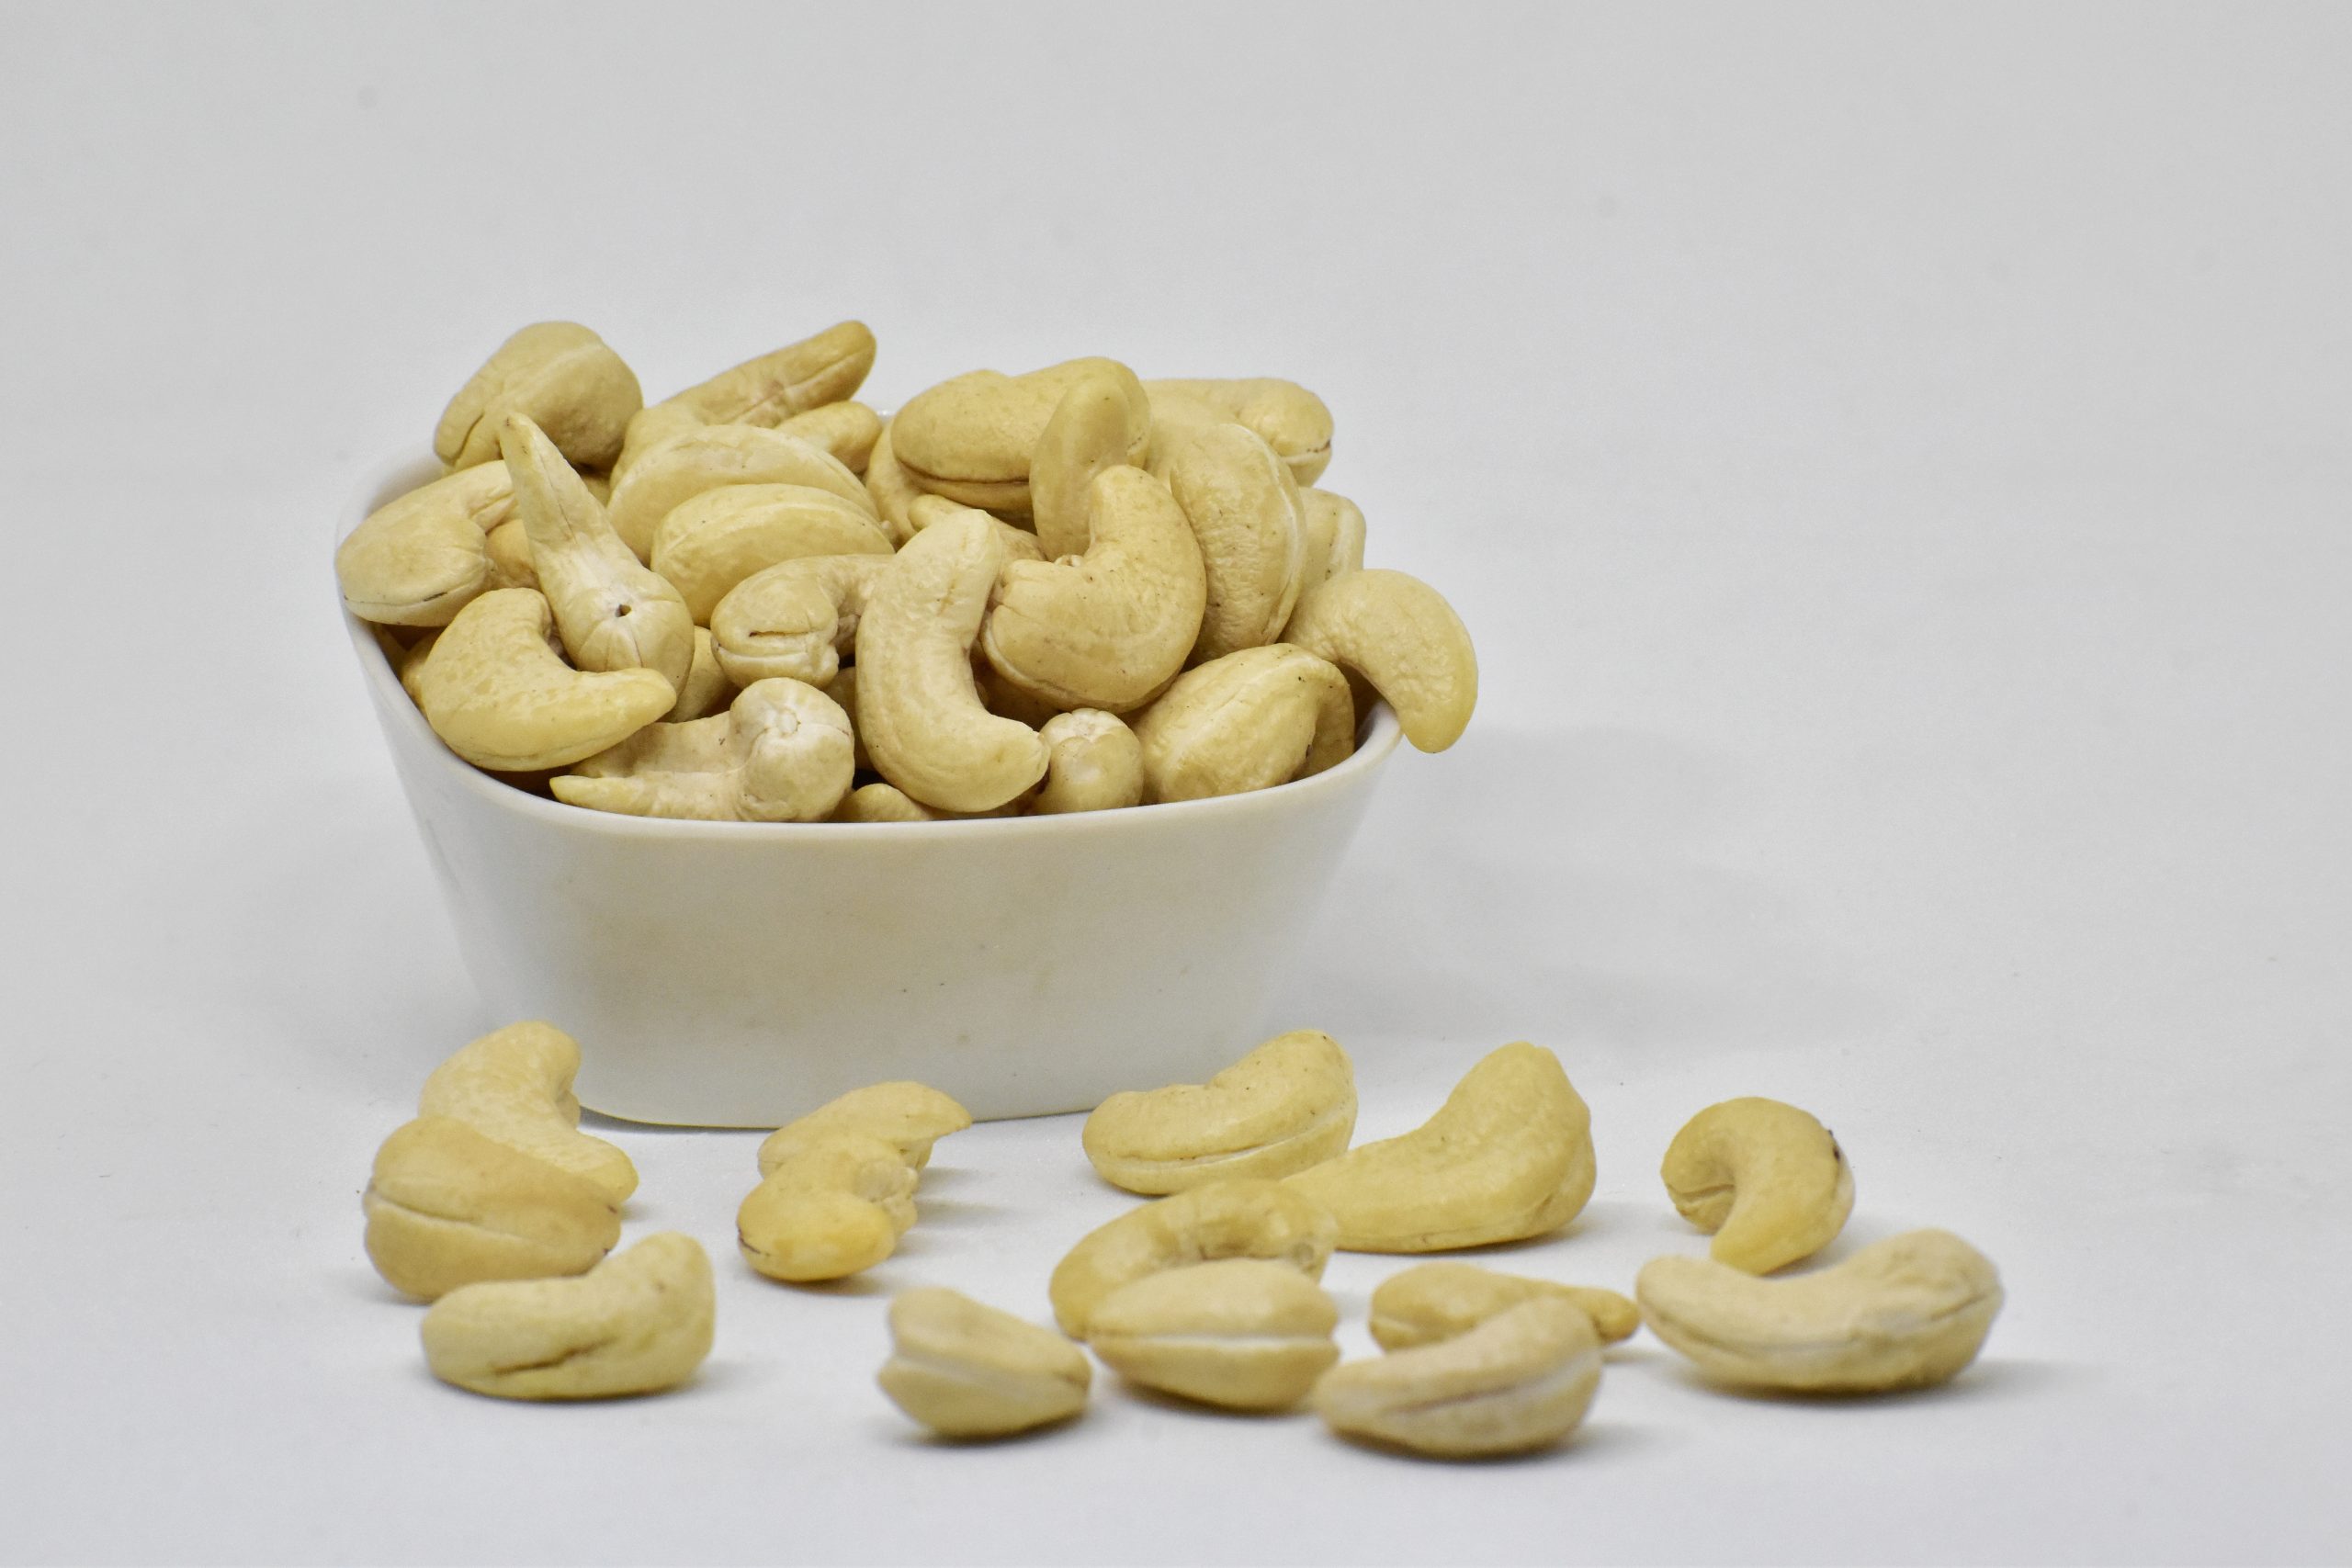 cashew nuts in a bird